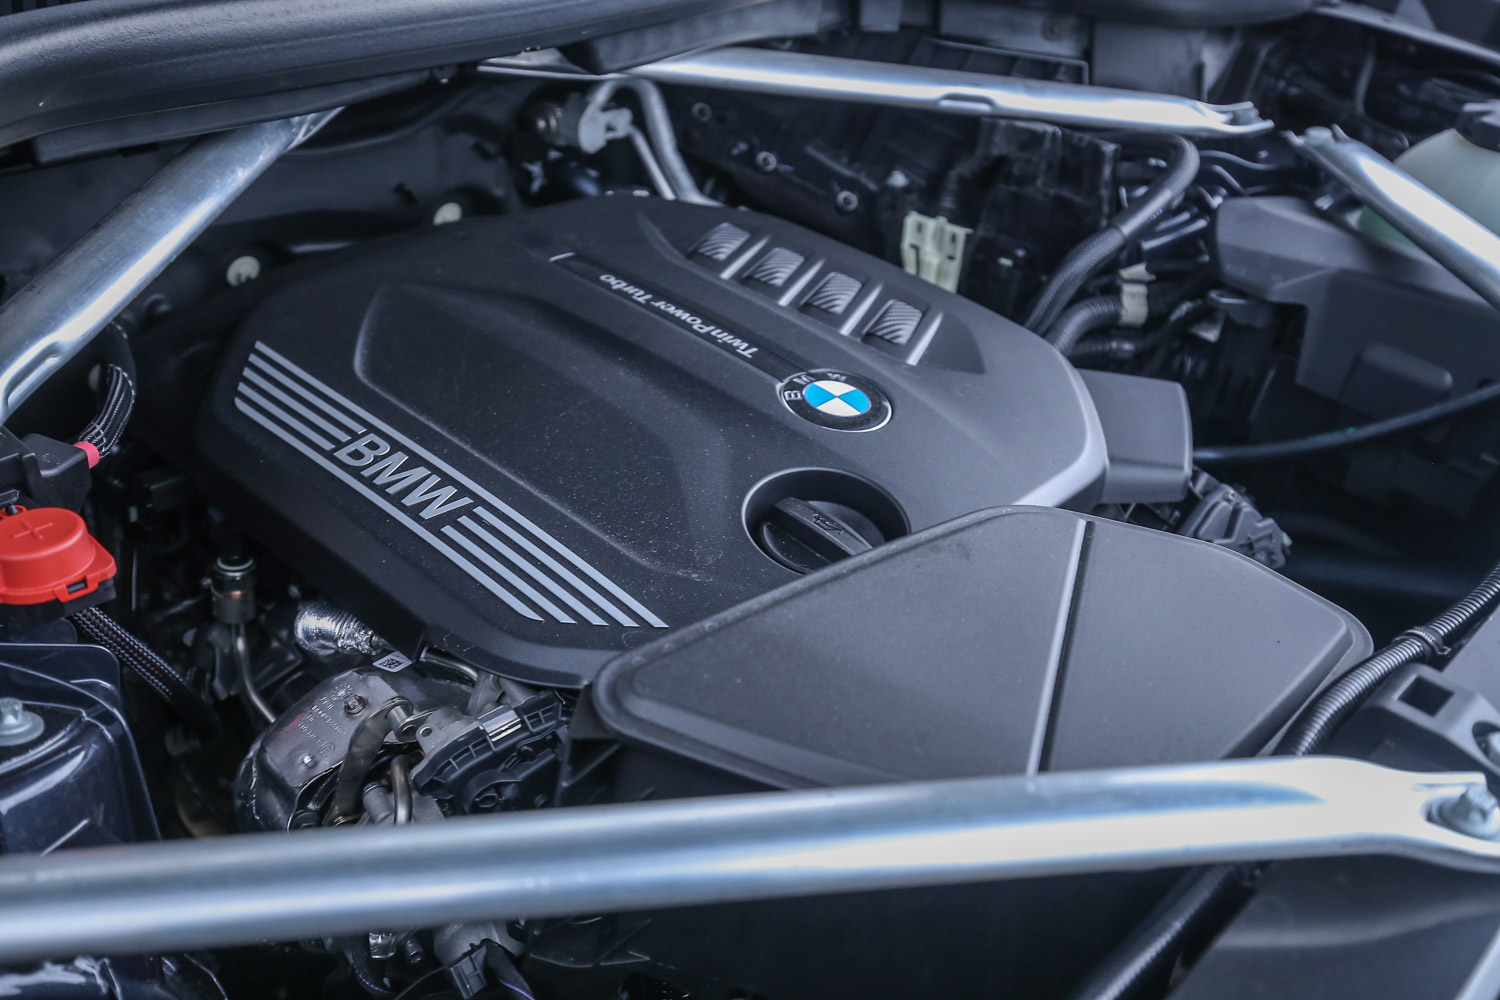 X5 xDrive25d 搭載 2.0 升直列四缸柴油引擎，最大馬力為 231hp/4400rpm，峰值扭力為 450Nm/1500rpm。